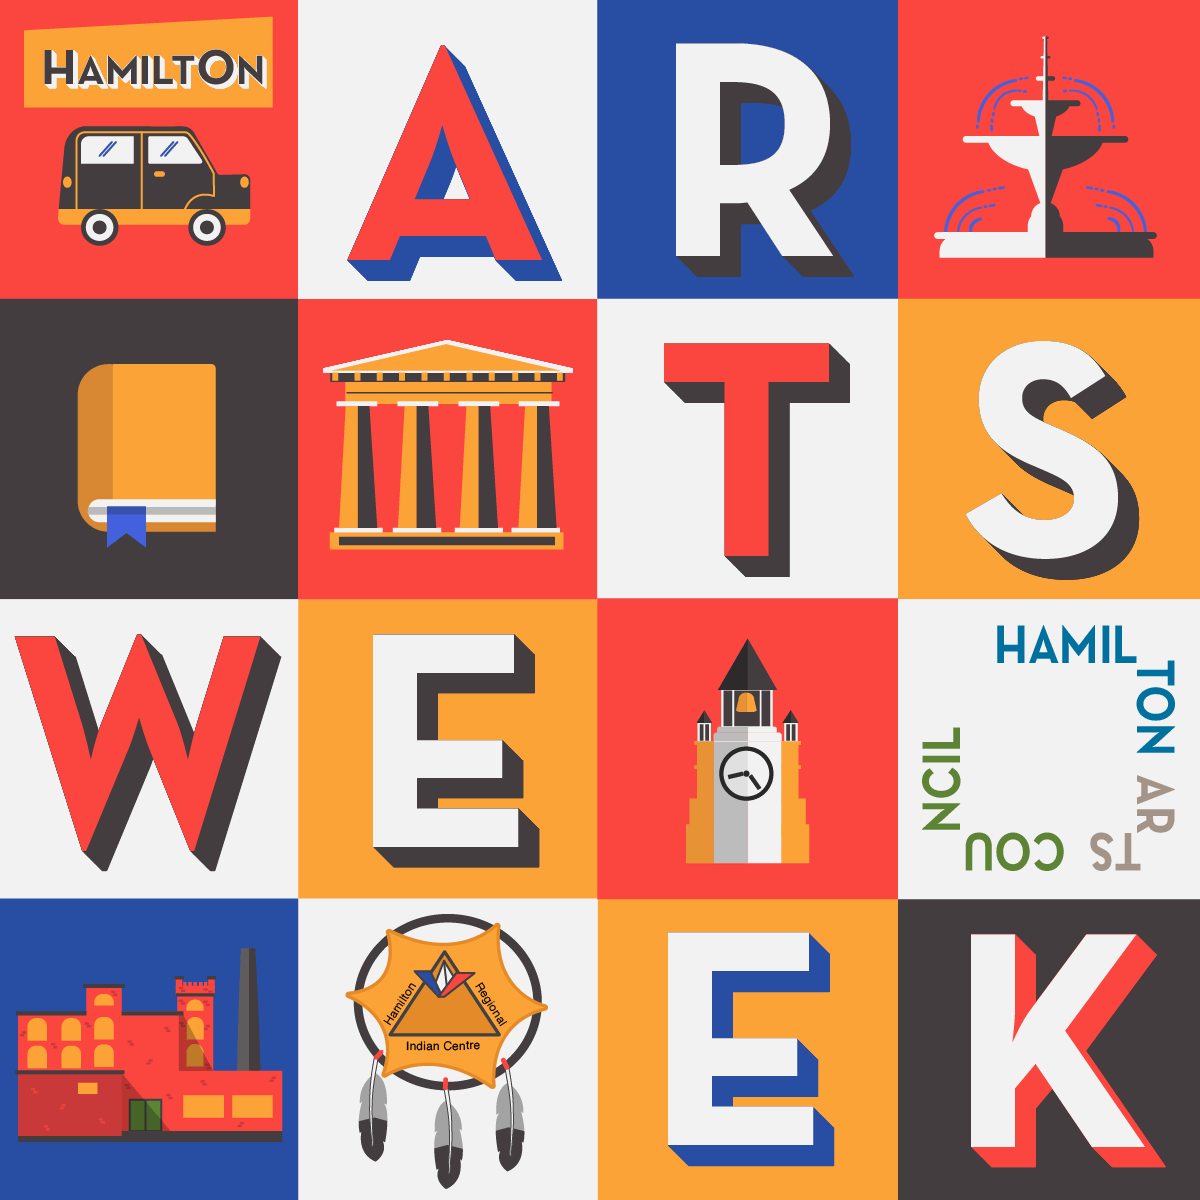 5th annual Hamilton Arts Week - image